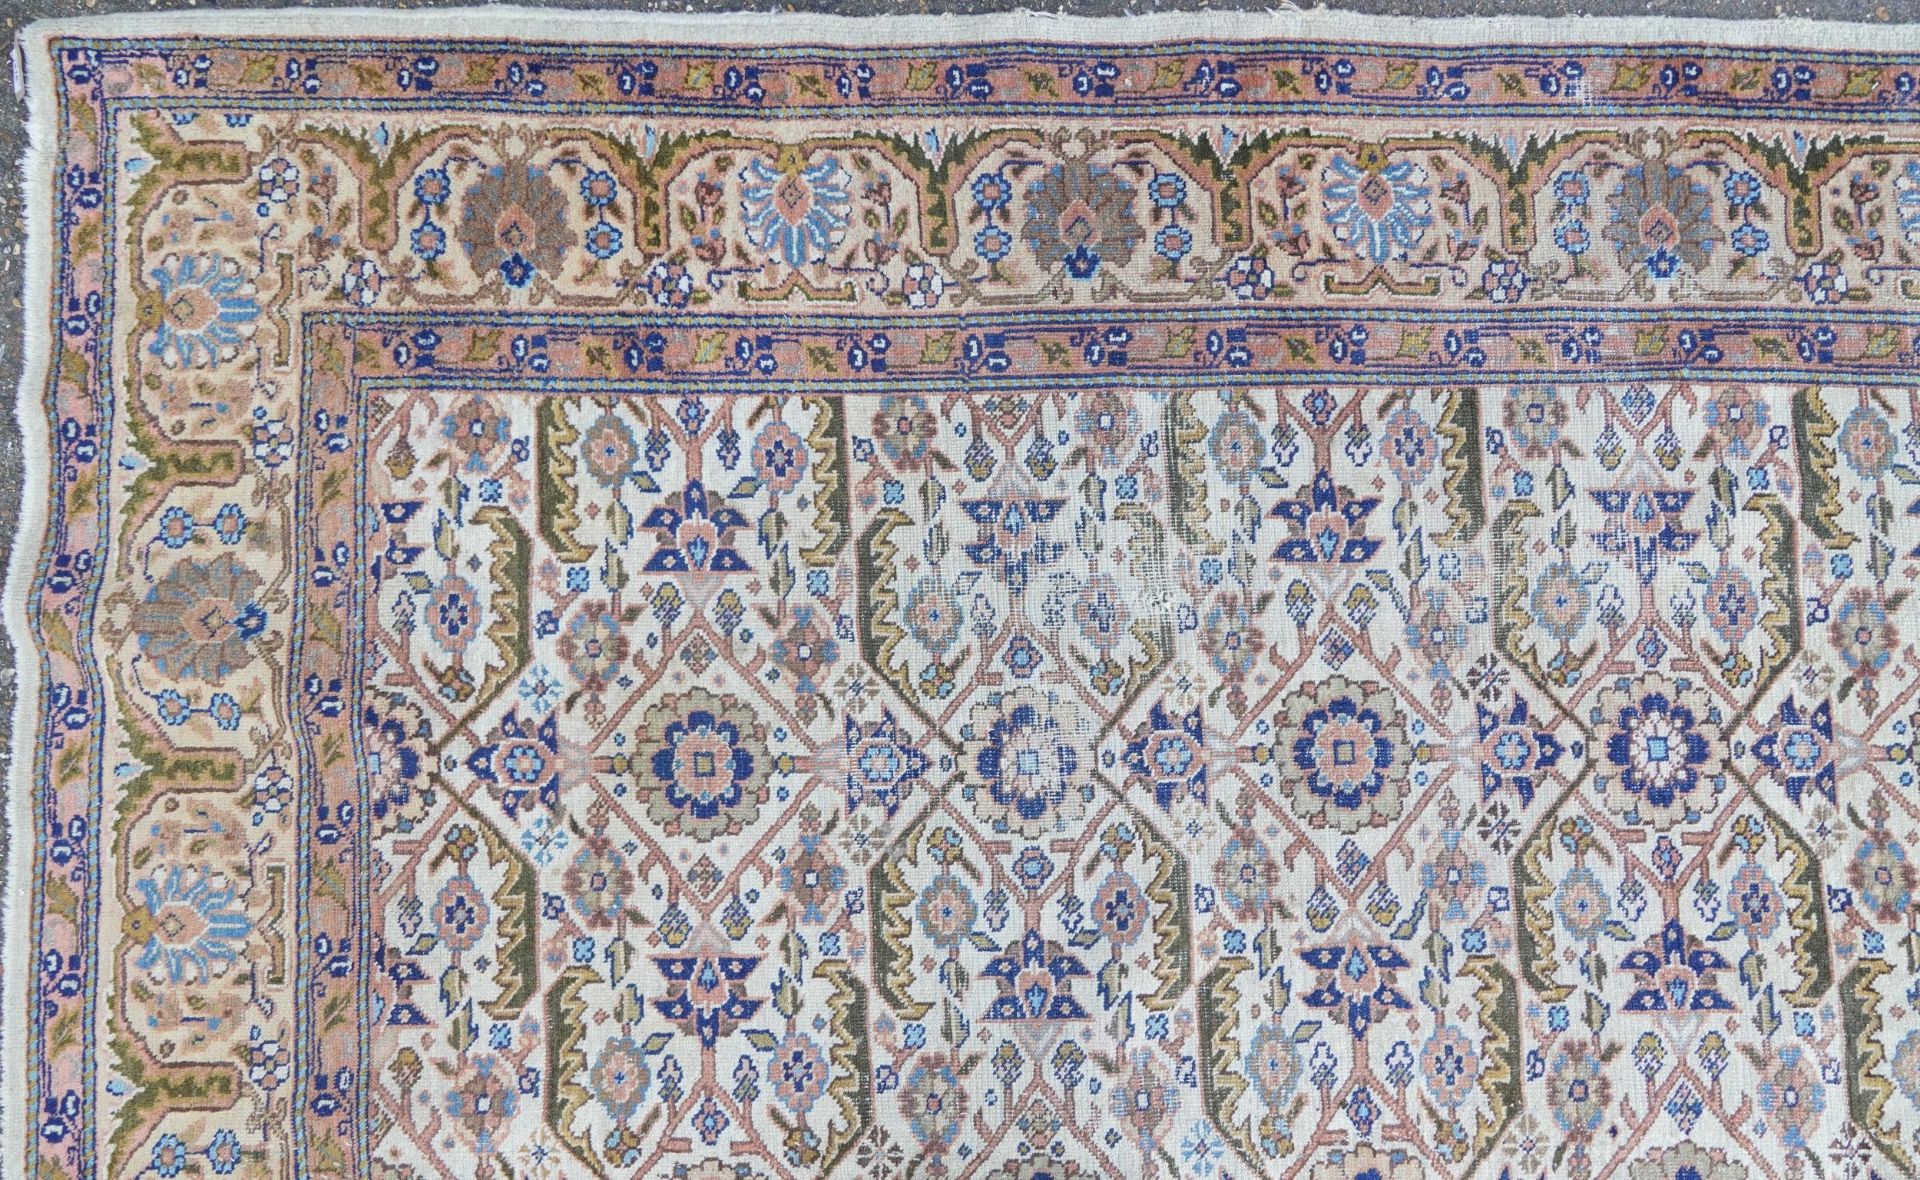 Rectangular Persian rug having an allover floral design within corresponding borders, 345cm x 255cm - Image 3 of 11